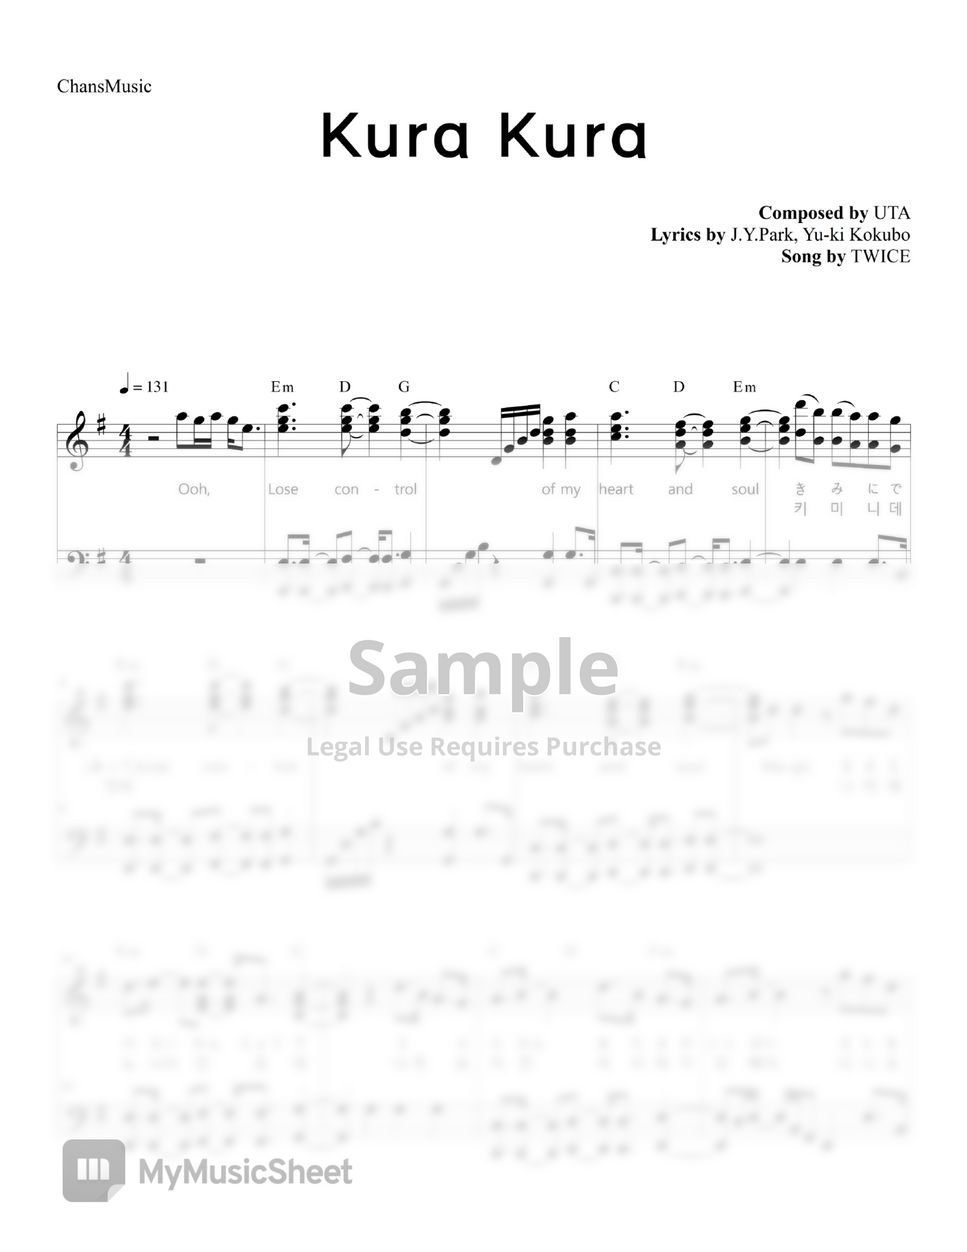 TWICE(트와이스) - Kura Kura (with Lyrics) by ChansMusic